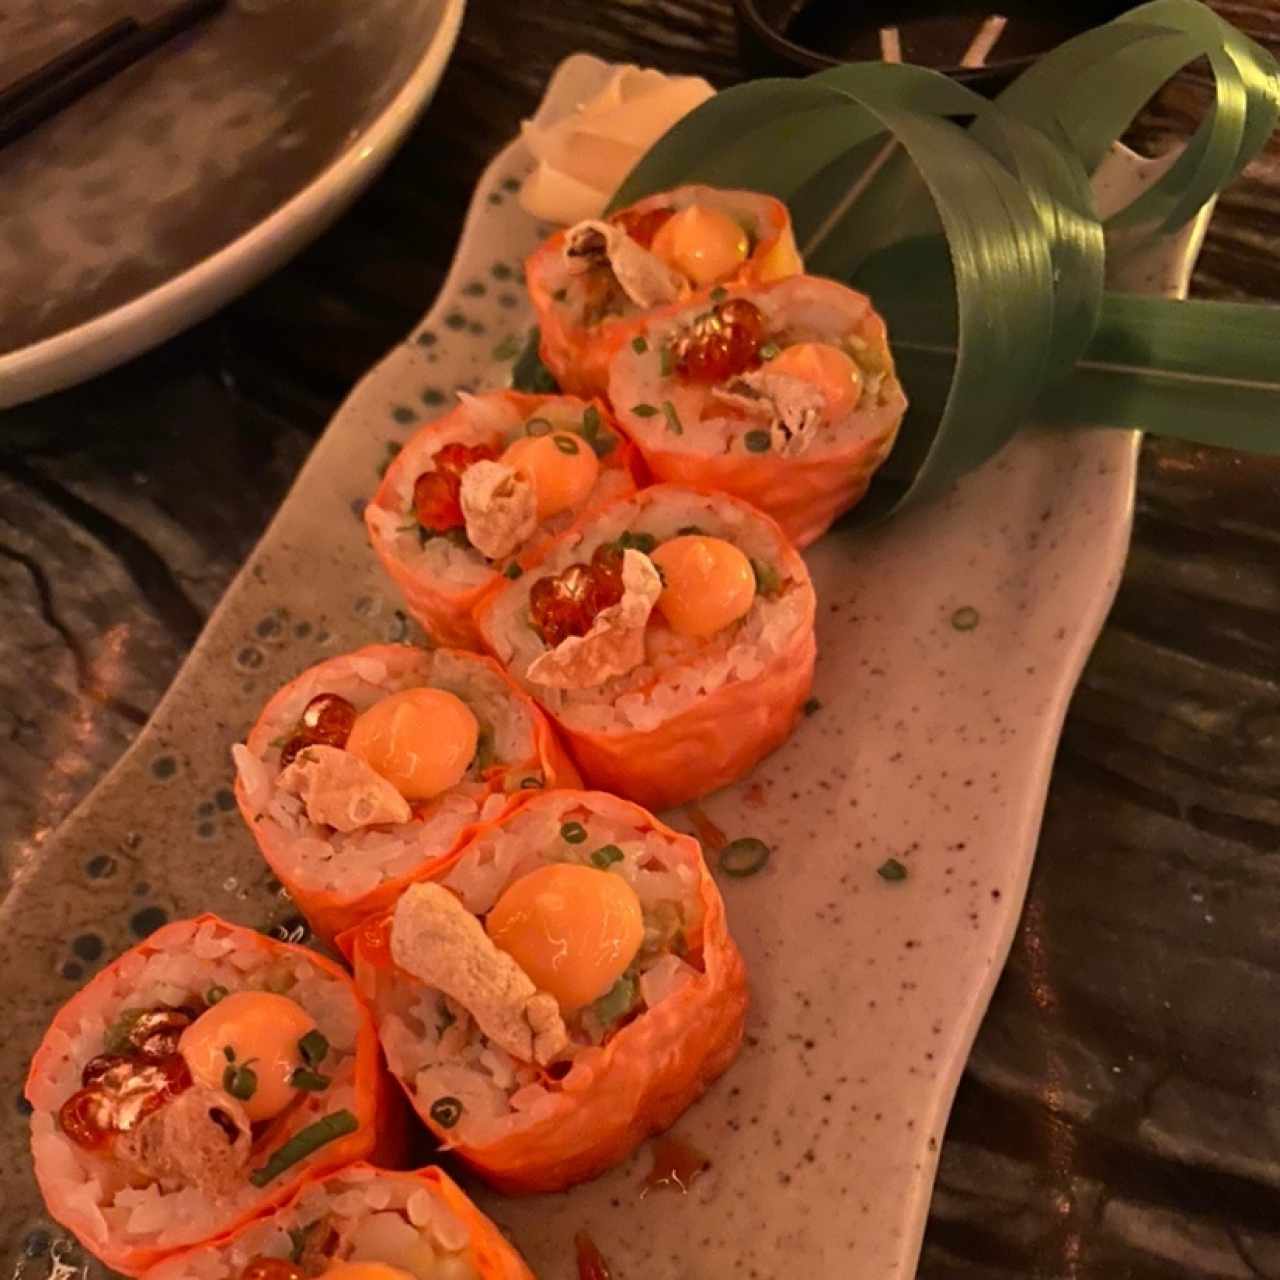 Sushi Bar - Dragon Roll